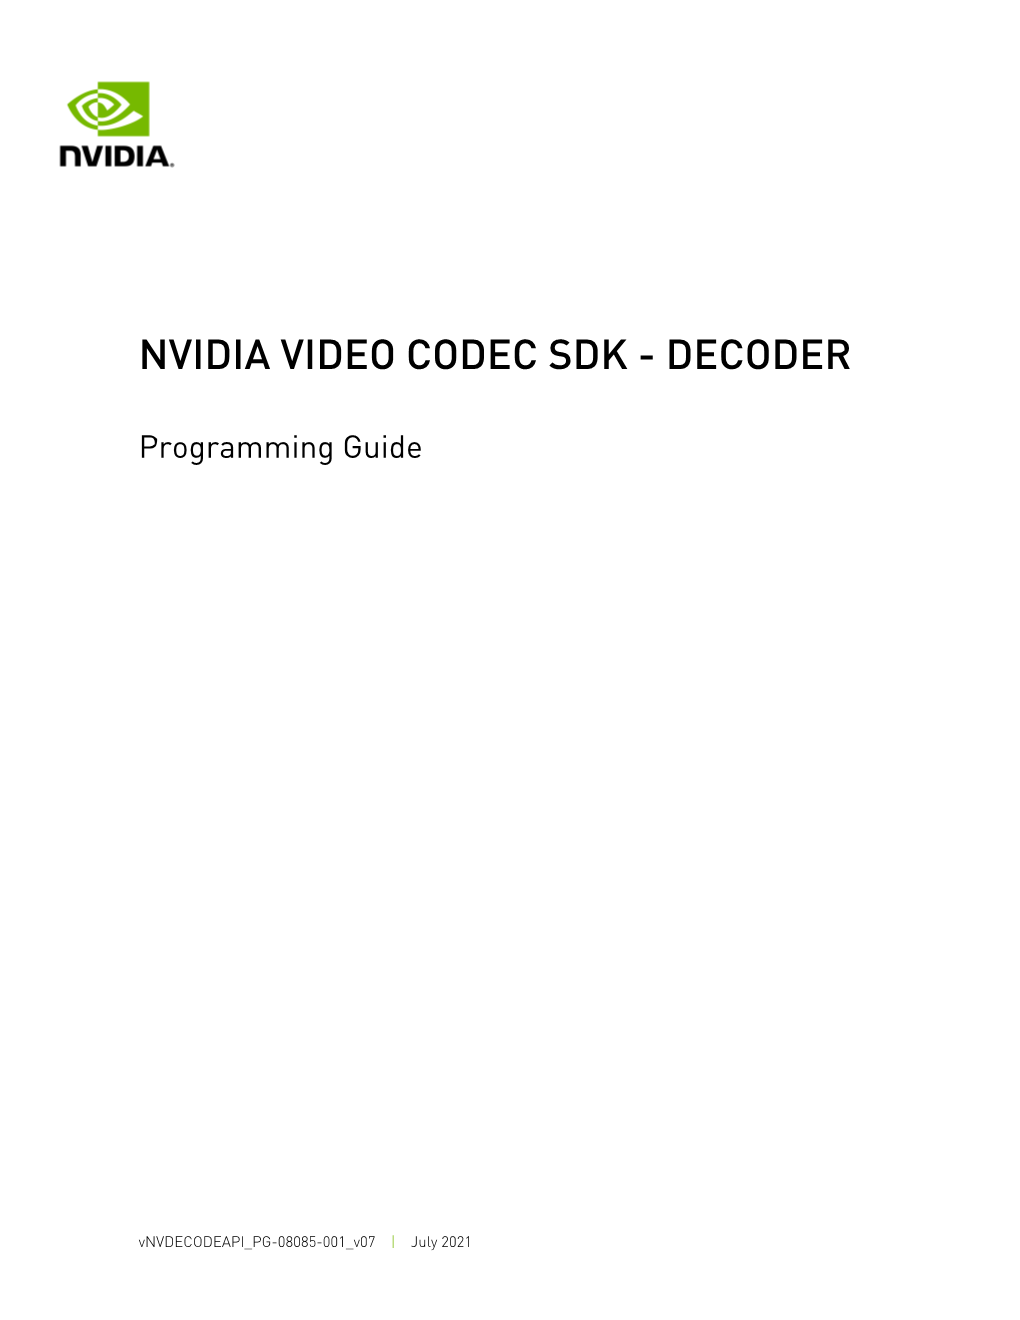 Nvidia Video Codec Sdk - Decoder